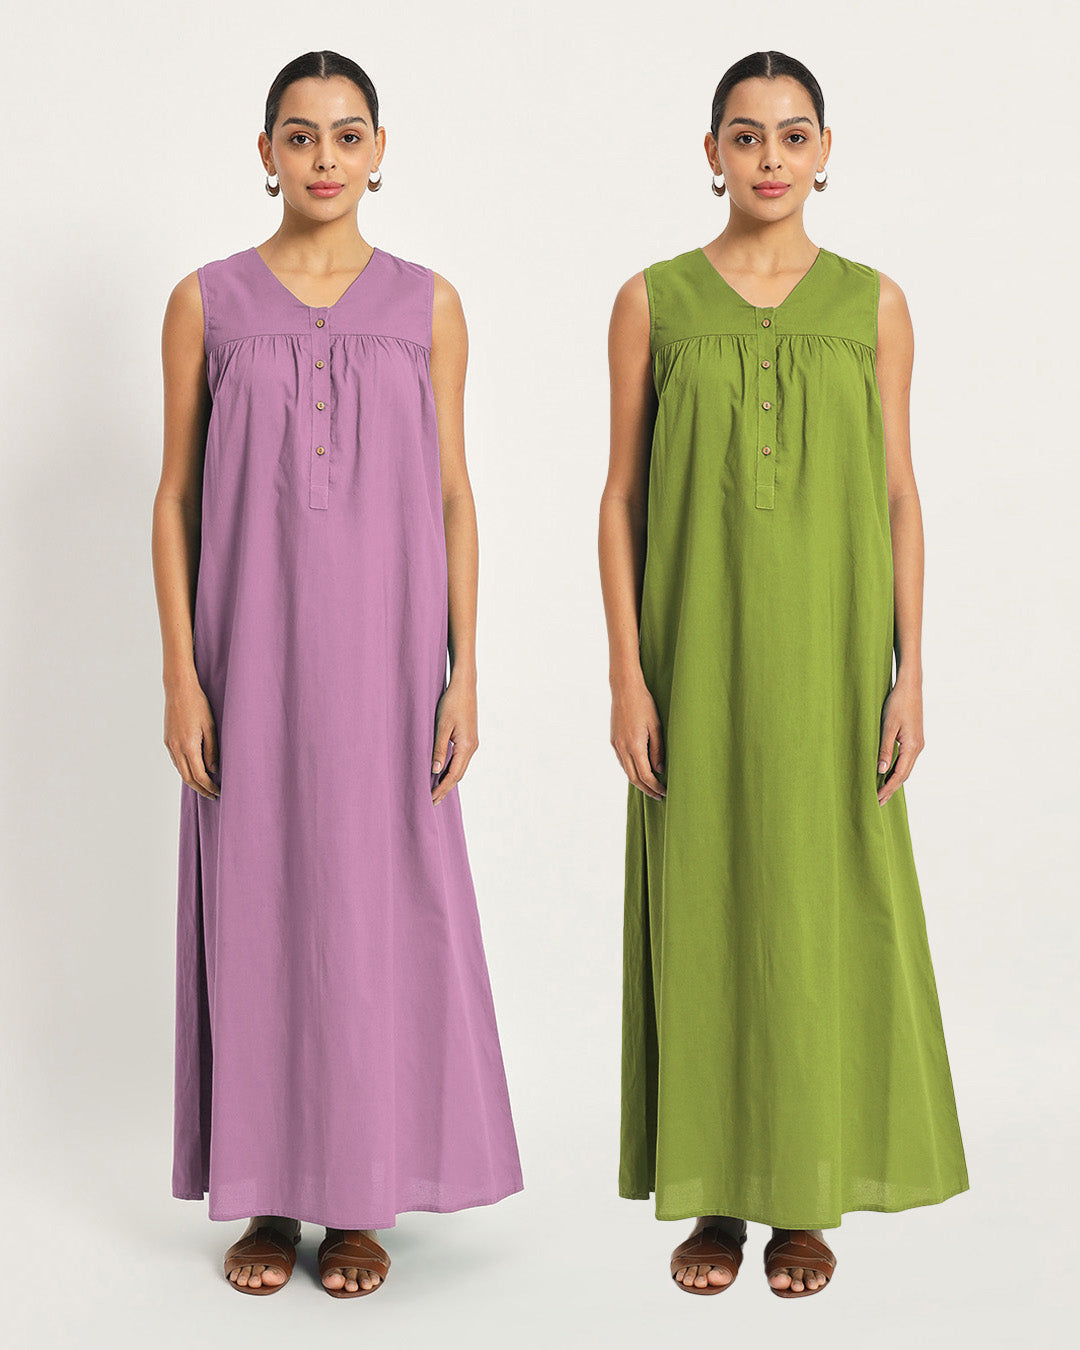 Combo: Iris Pink & Sage Green Restful Retreat Nightdress